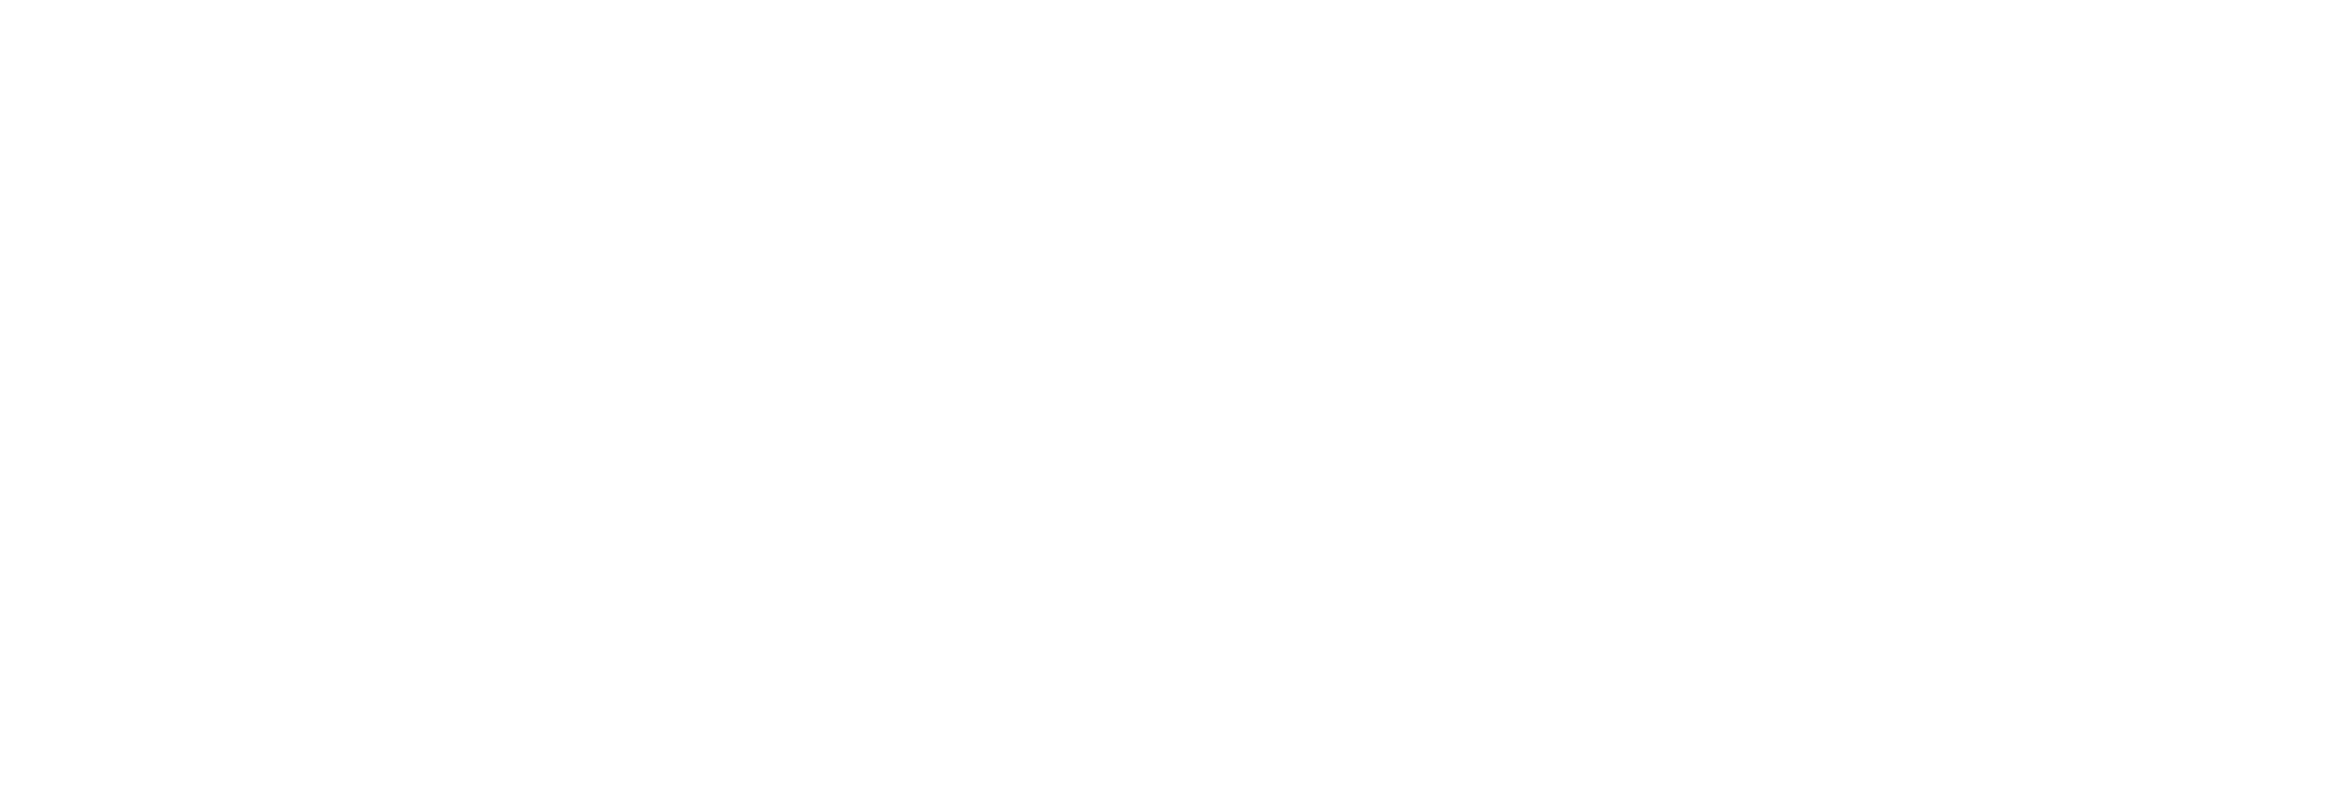 Grand Rapids Symphony - Mercelo Lehninger, Music Director